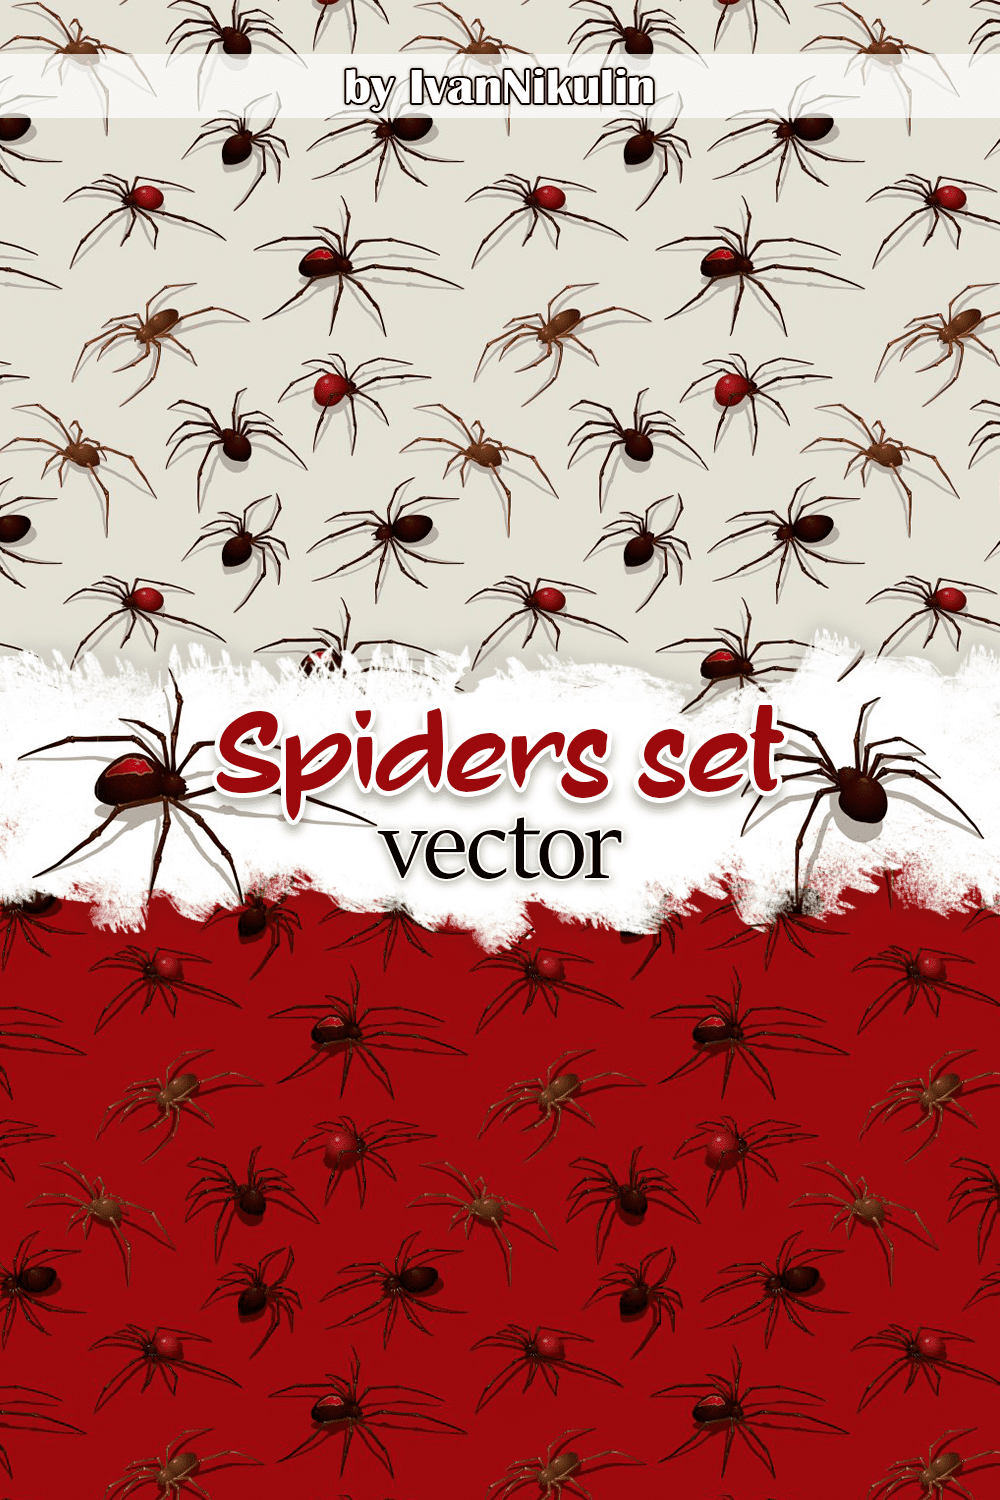 Interesting design for spiders set.